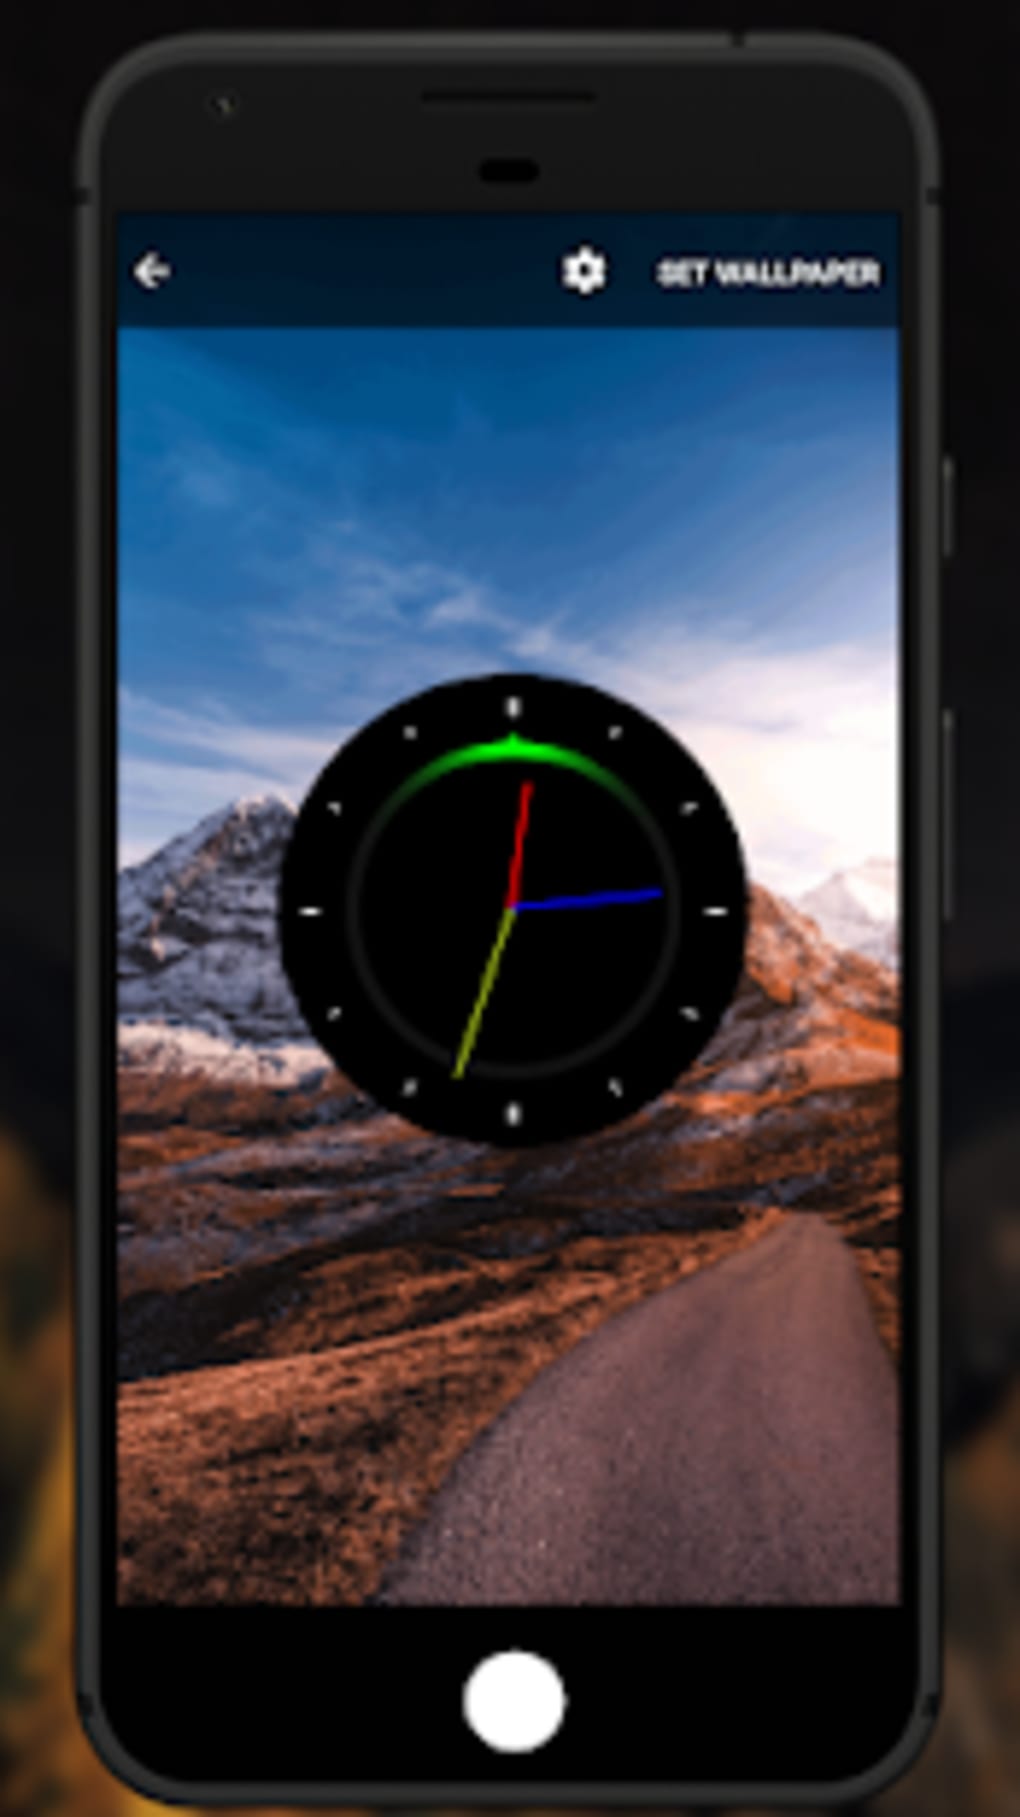 Analog Night Clock Live Wallpaper - Android - HD Wallpaper 